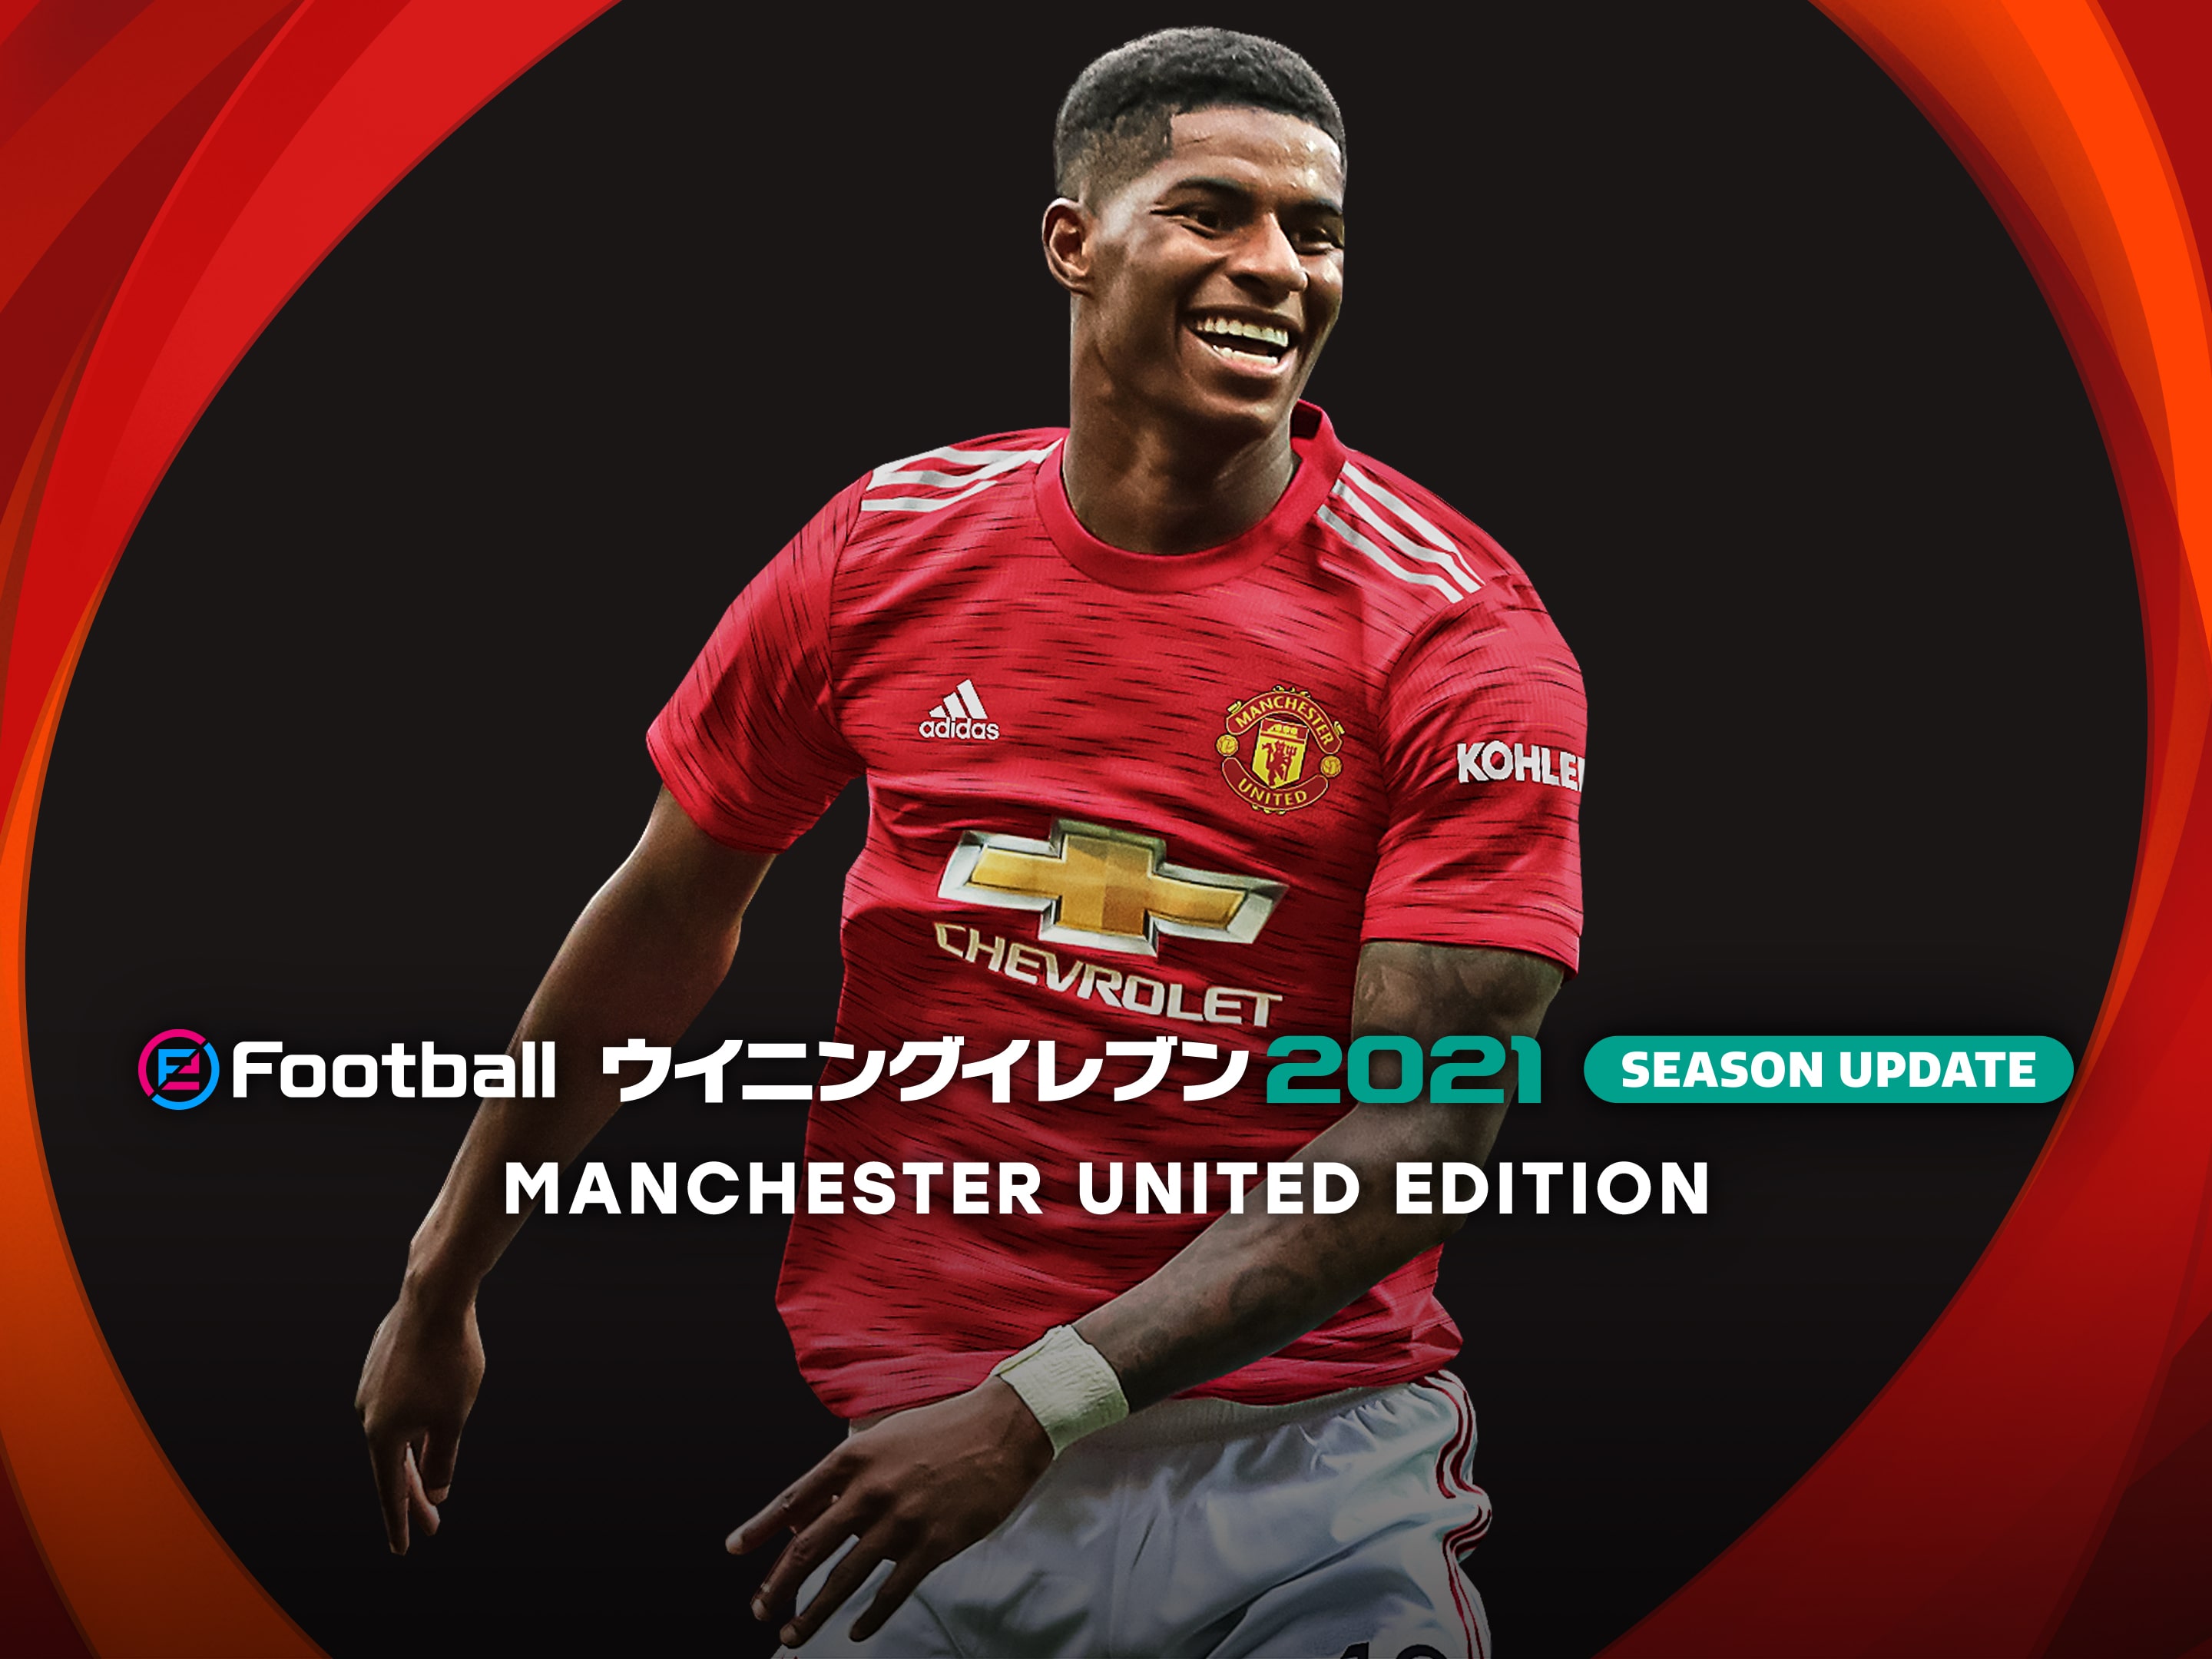 Efootball ウイニングイレブン 21 Season Update Manchester United Edition